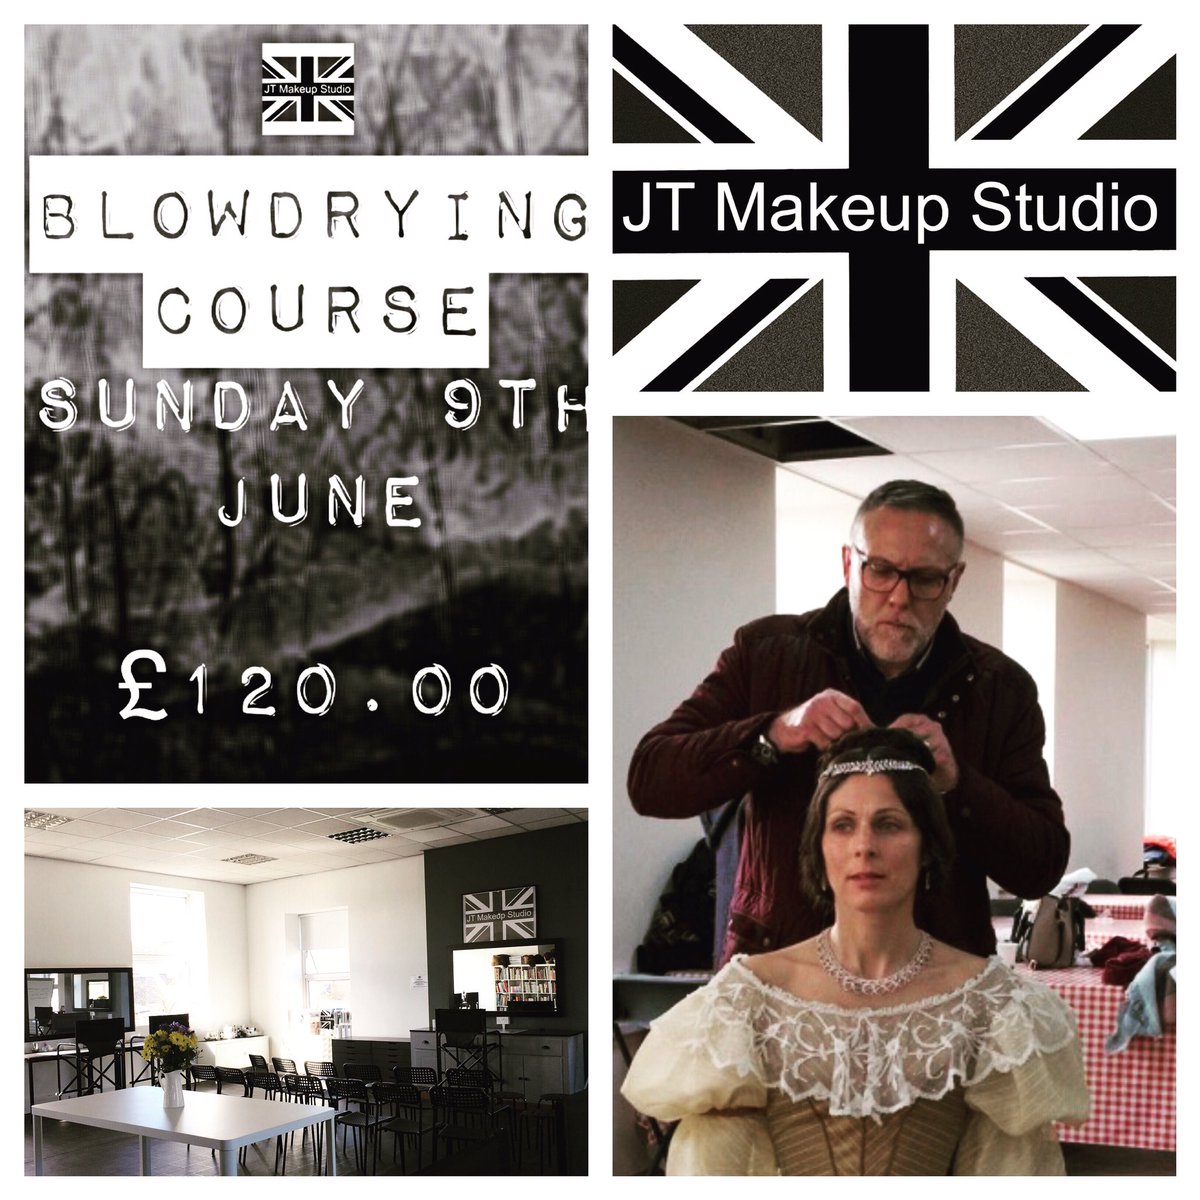 Blowdrying Course with Ronnie Radbourne @JTMakeupStudio in June. Email sales@jtmakeup.co.uk for more info #jtmakeupstudio #filmmakeupartists #fashionmakeupartists